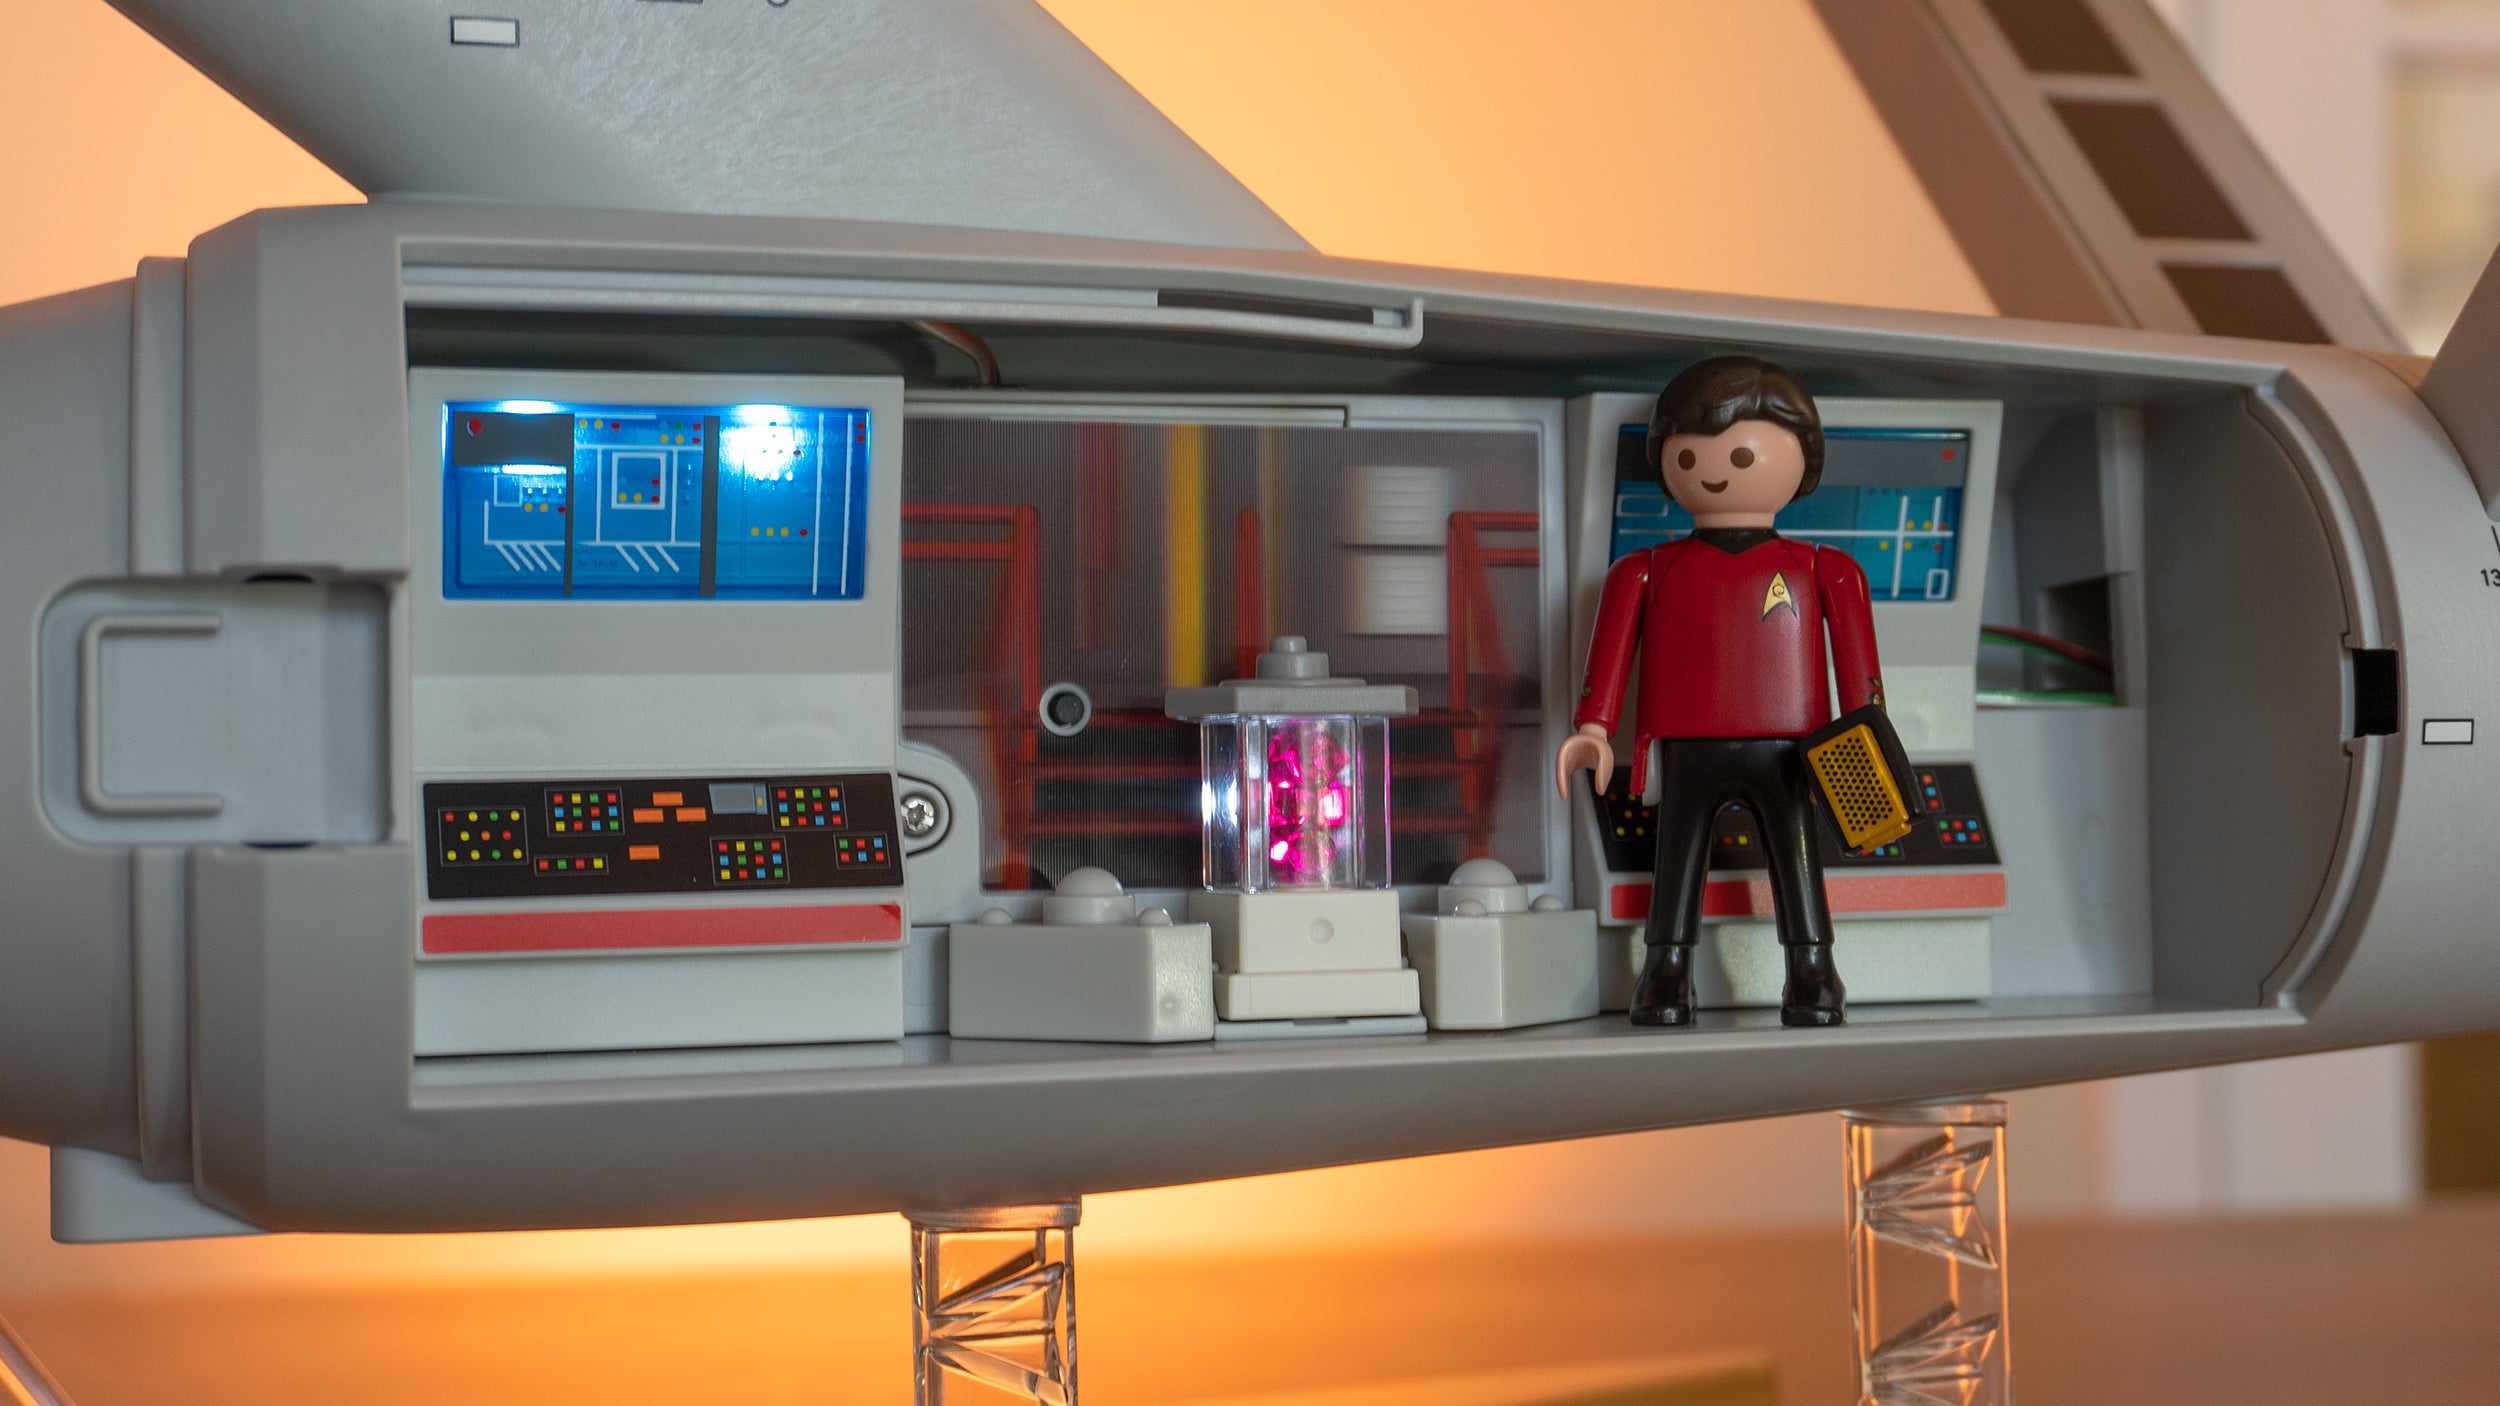 Star Trek: USS Enterprise (#70548) by Playmobil, Part 2